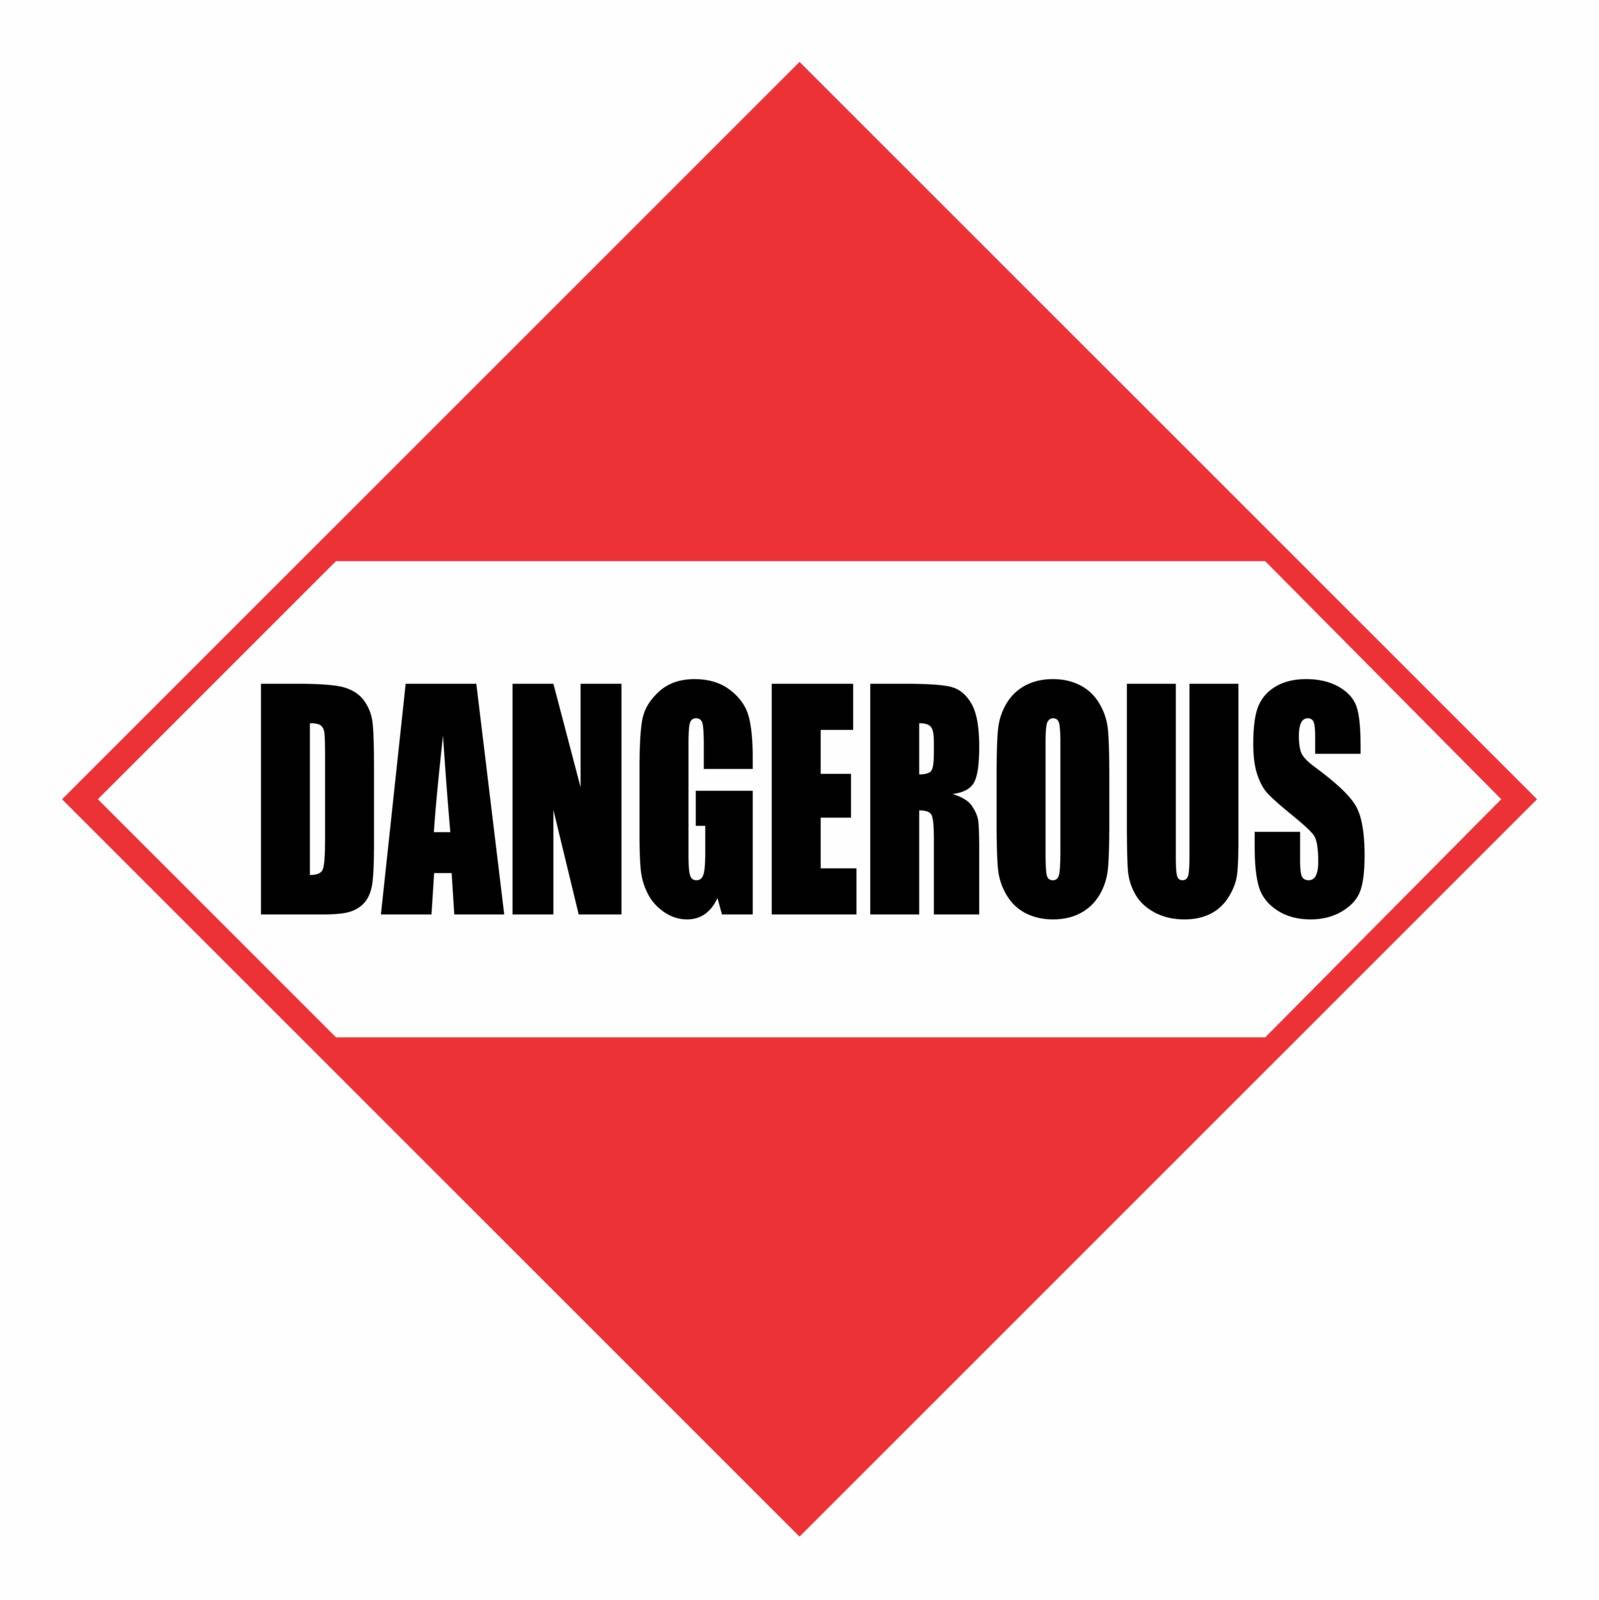 Dangerous sign. Blank dangerous sign in red illustration.